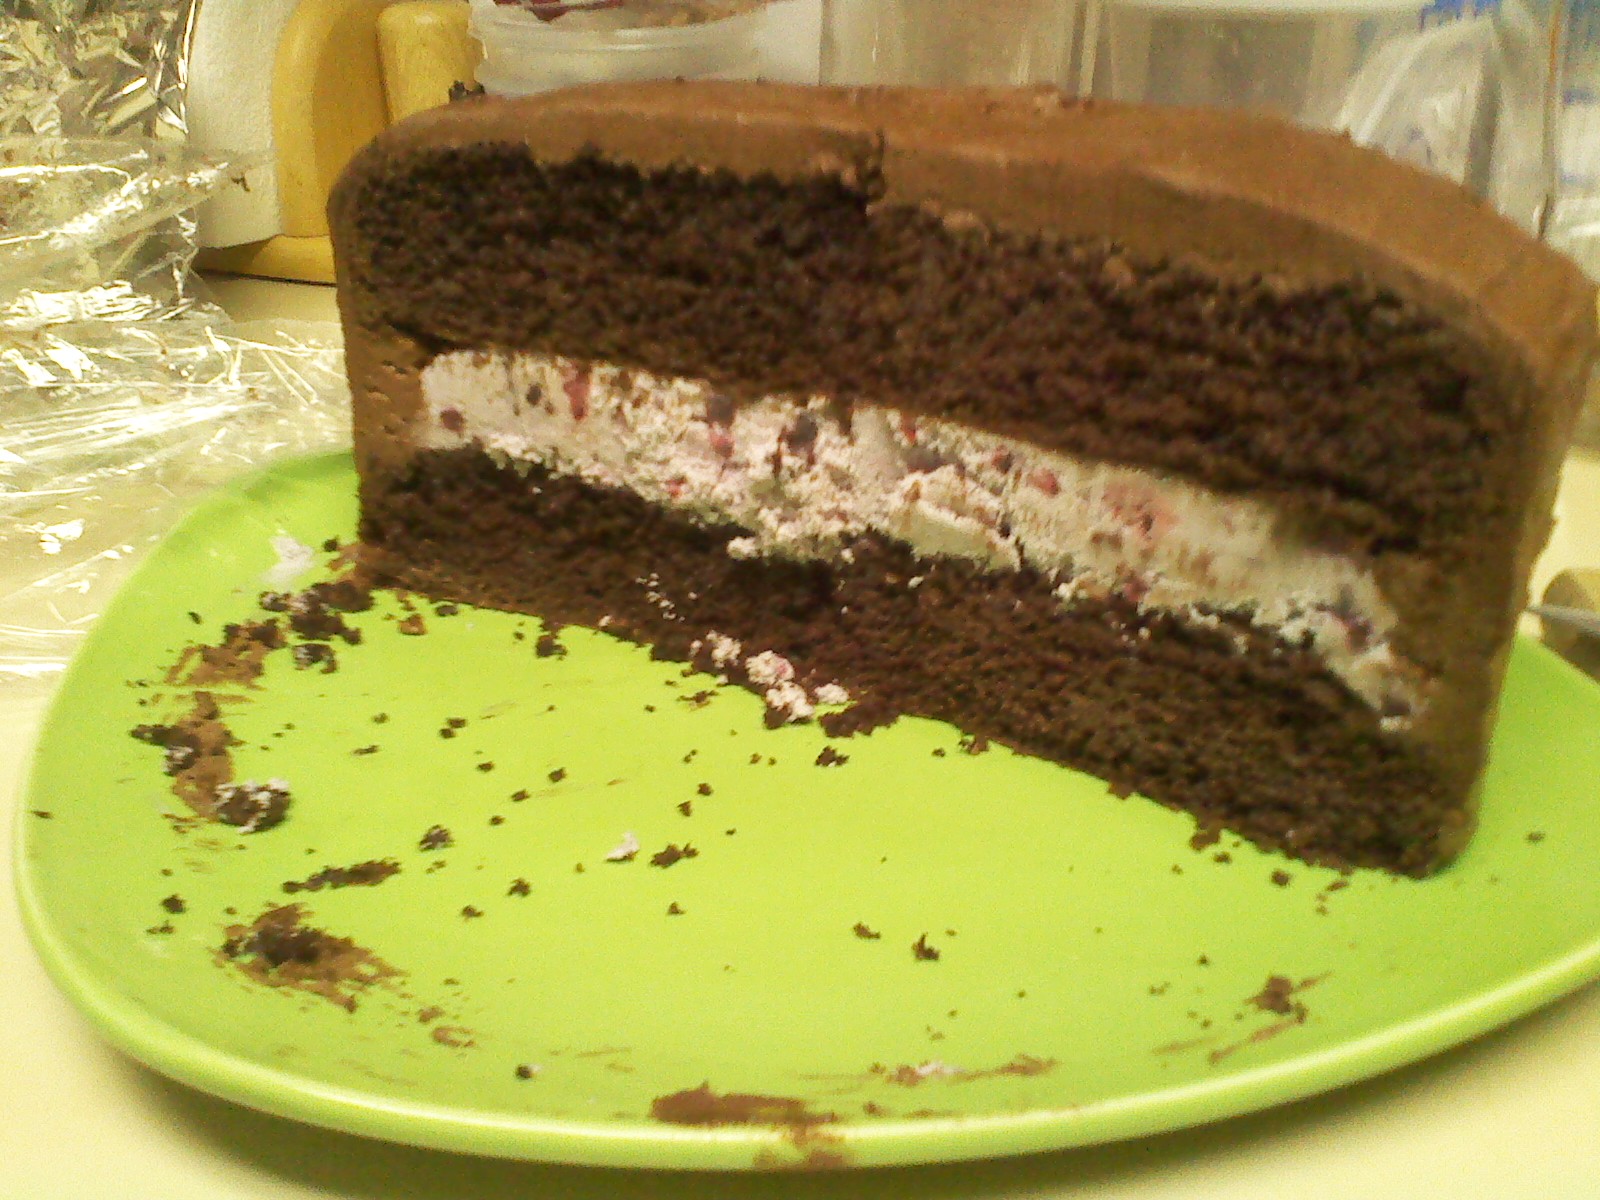 ... on this one i used a cake mix i can t find a good chocolate cake